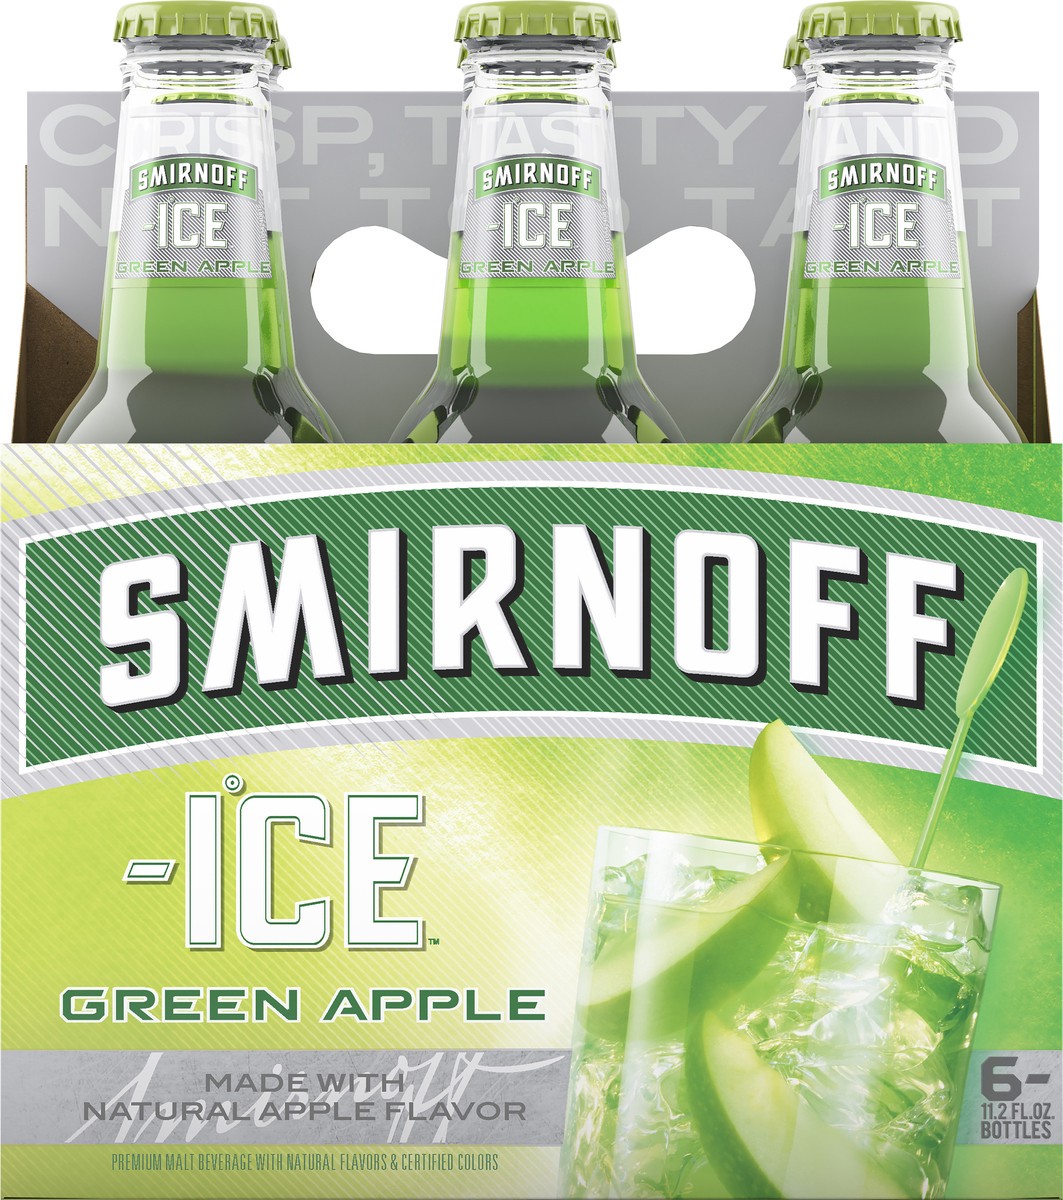 slide 2 of 3, Smirnoff Ice Green Apple Malt Beverage 6 - 11.2 fl oz Bottles, 6 ct